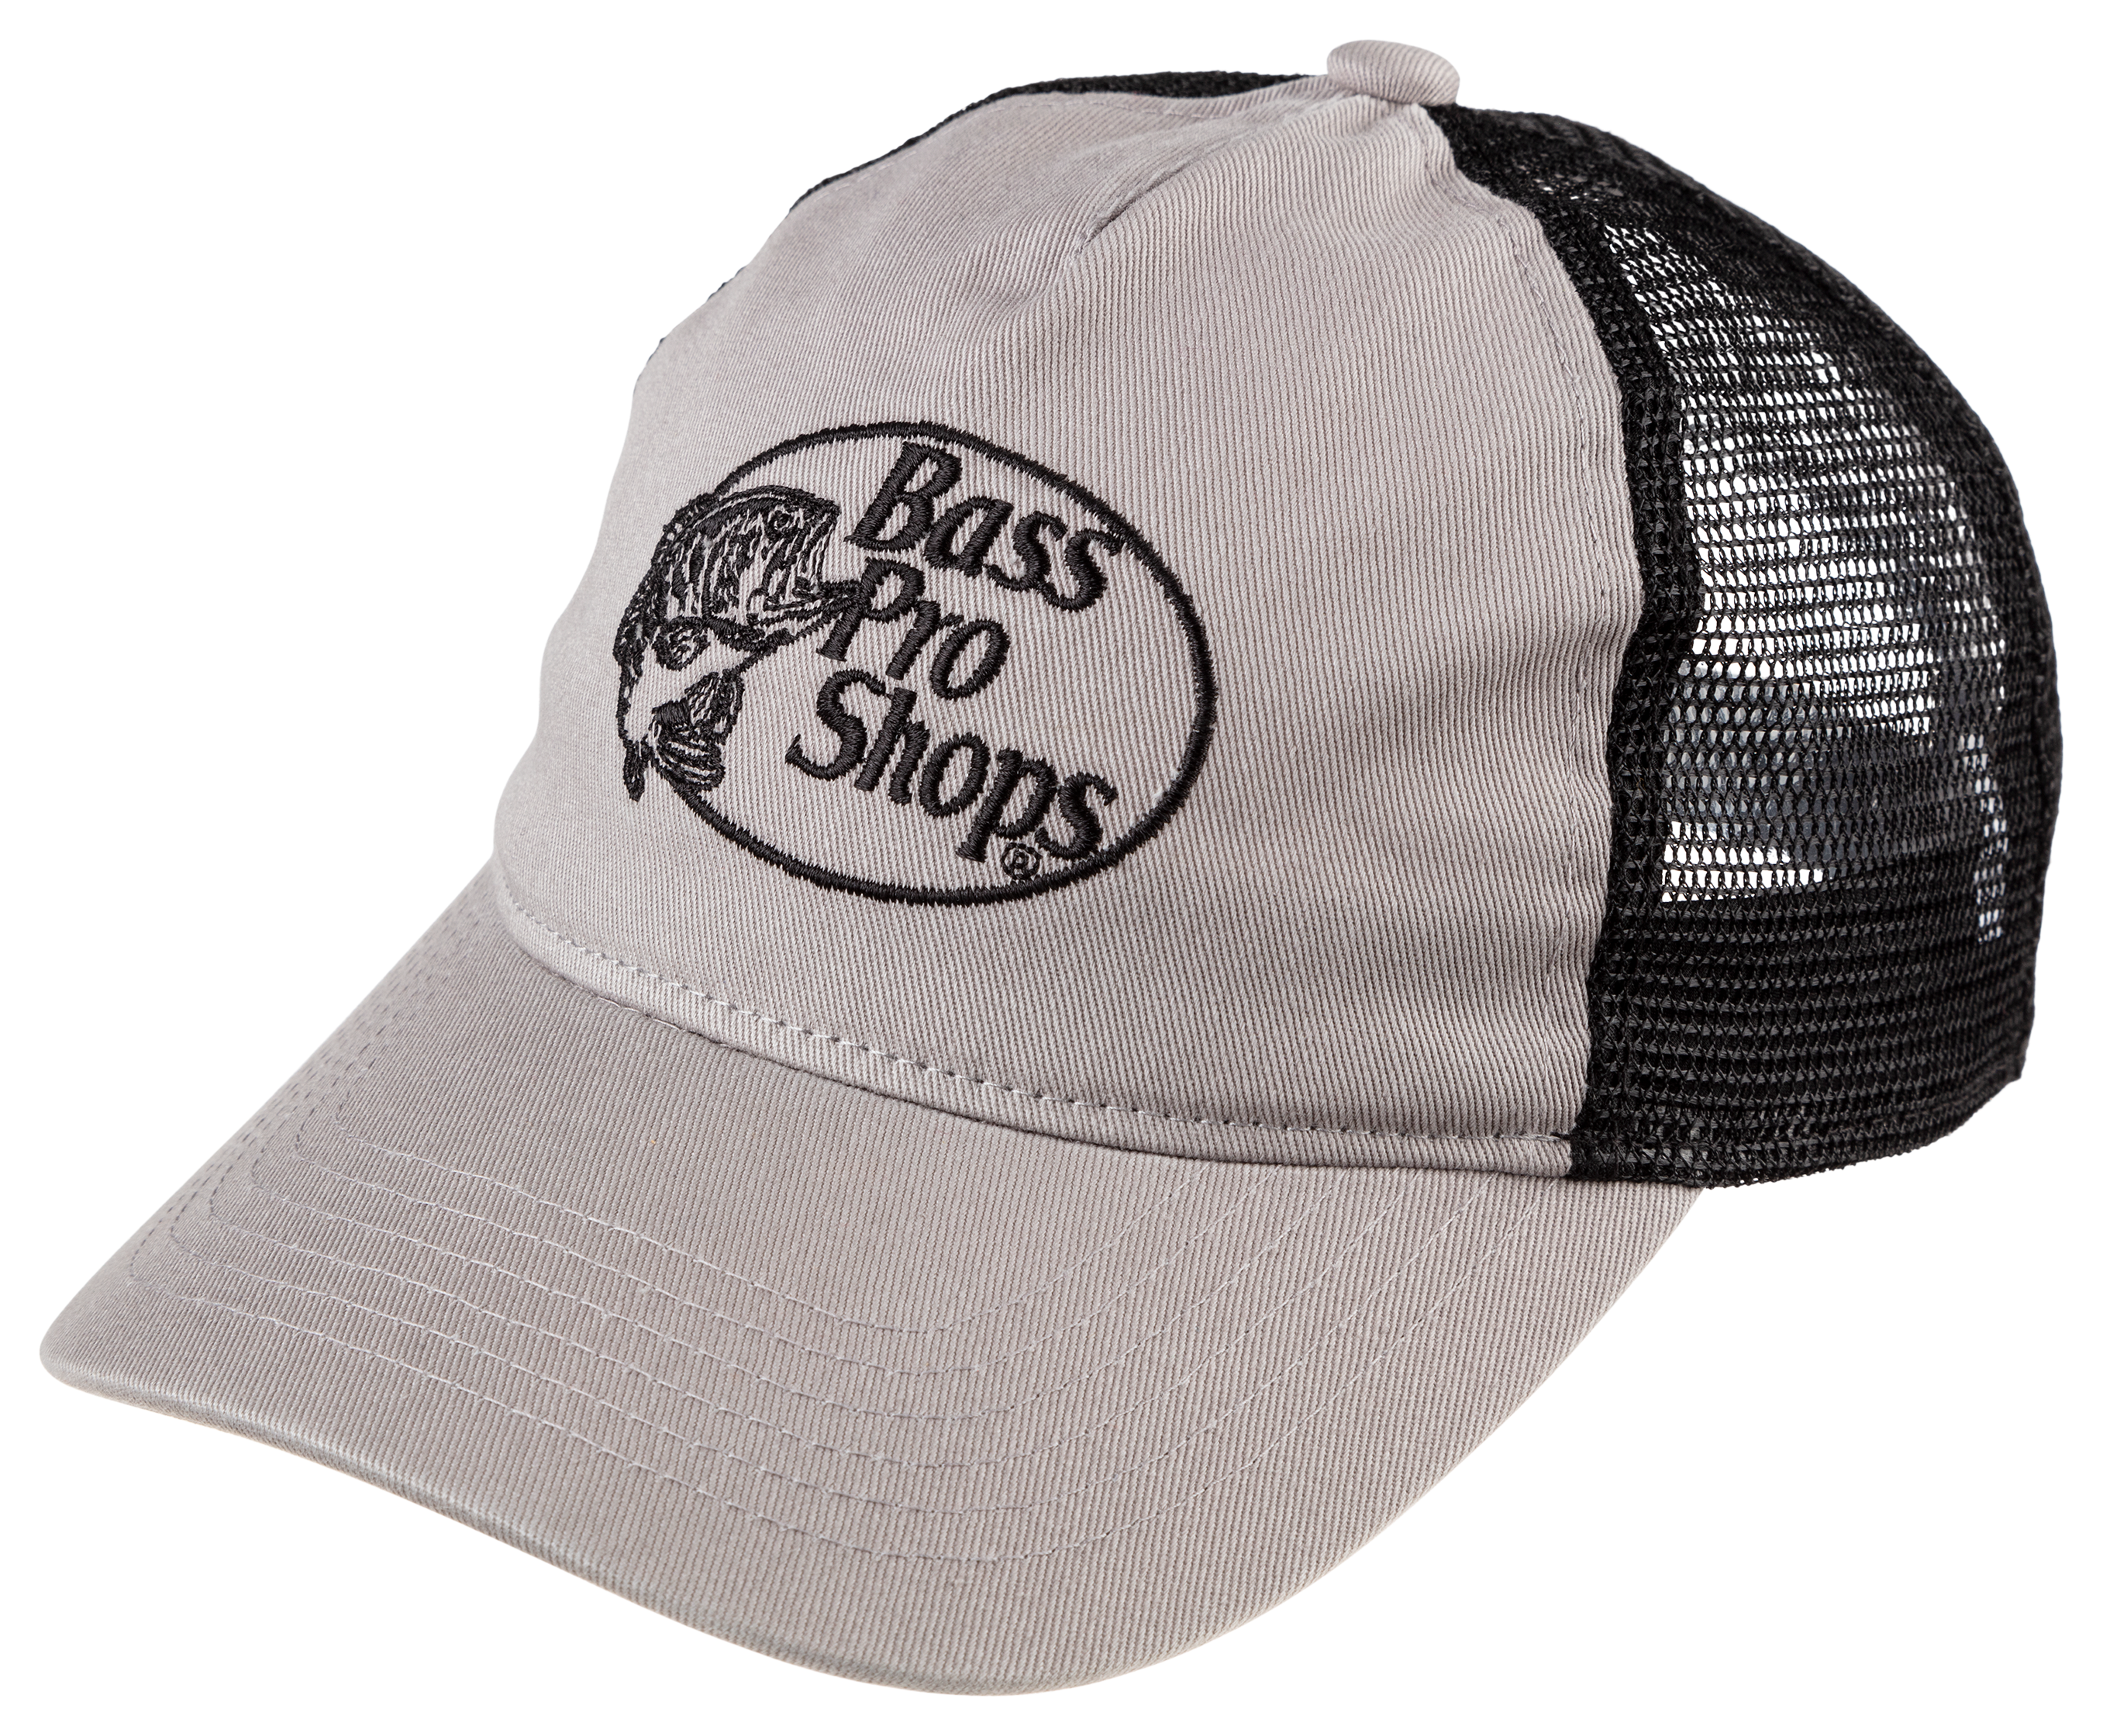 Bass Pro Shops Fishing Trucker Hat Mesh Cap Adjustable SnapBack